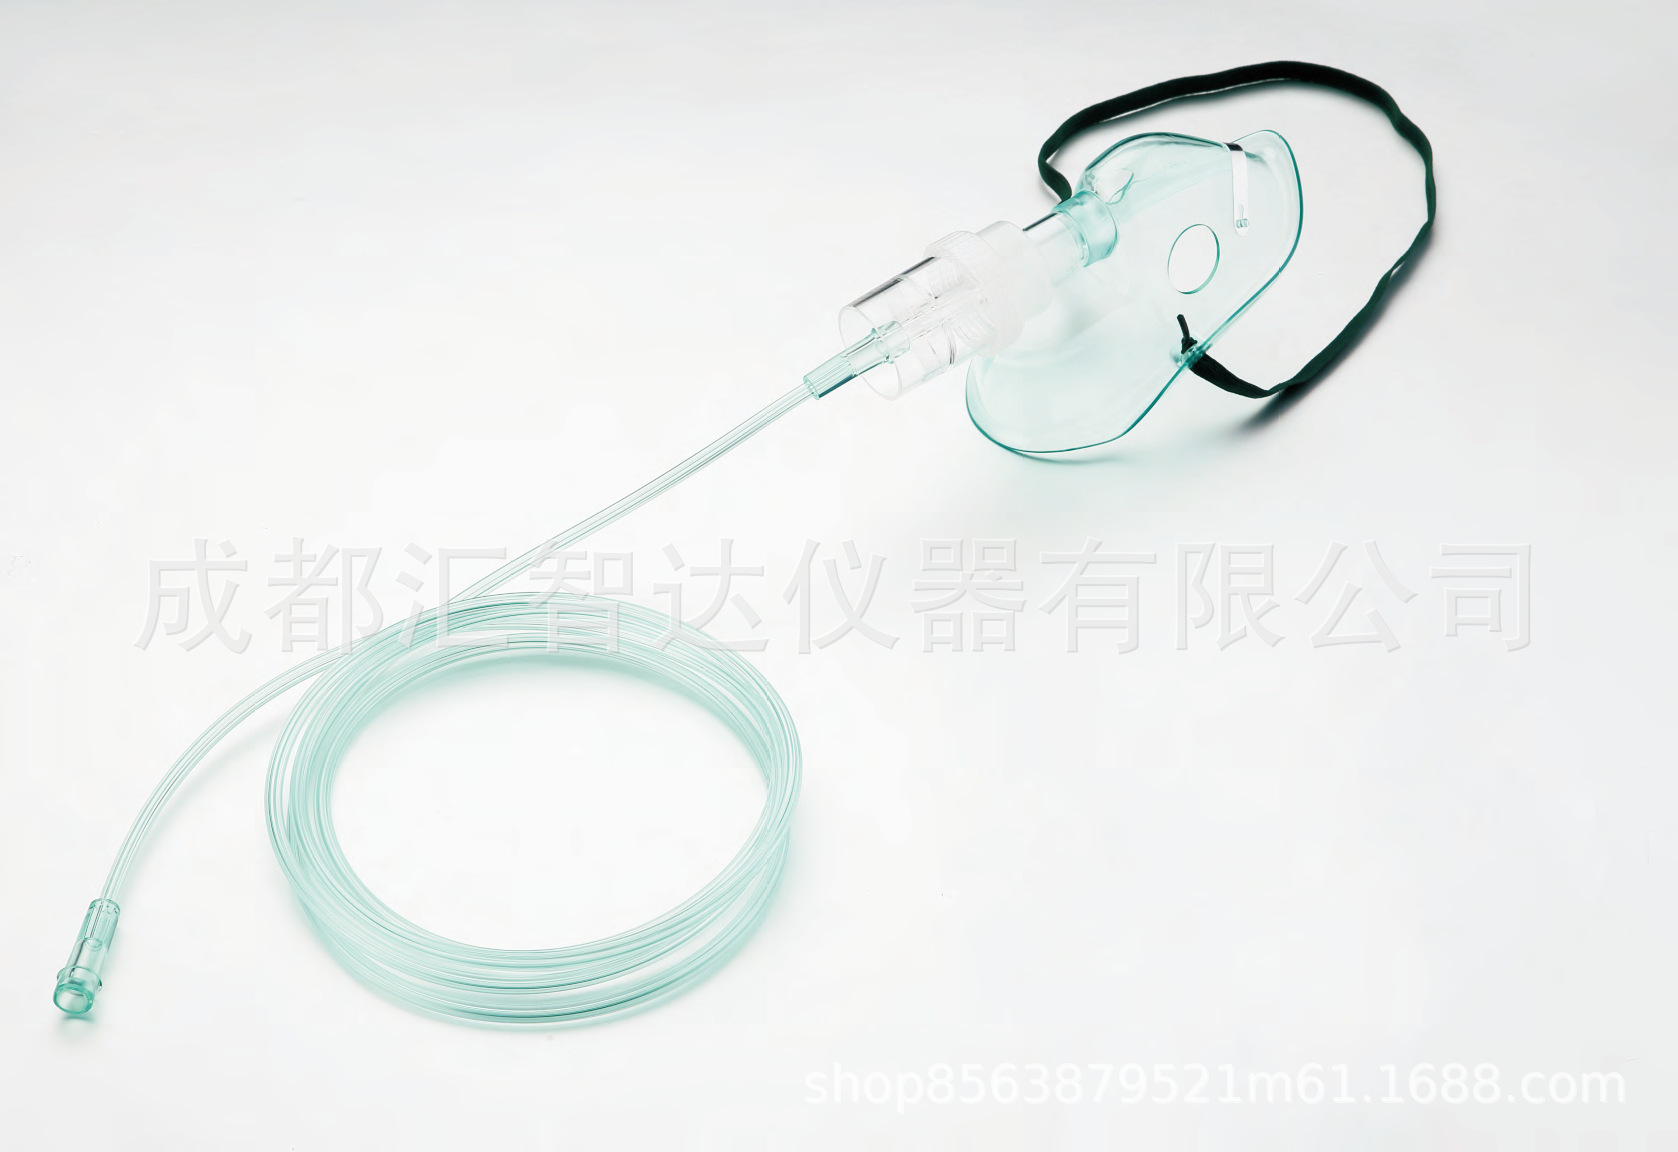 Atomization Inhaler (Rotatable Atomization Mask) Nebulizer Mask (Aerosol Mask)